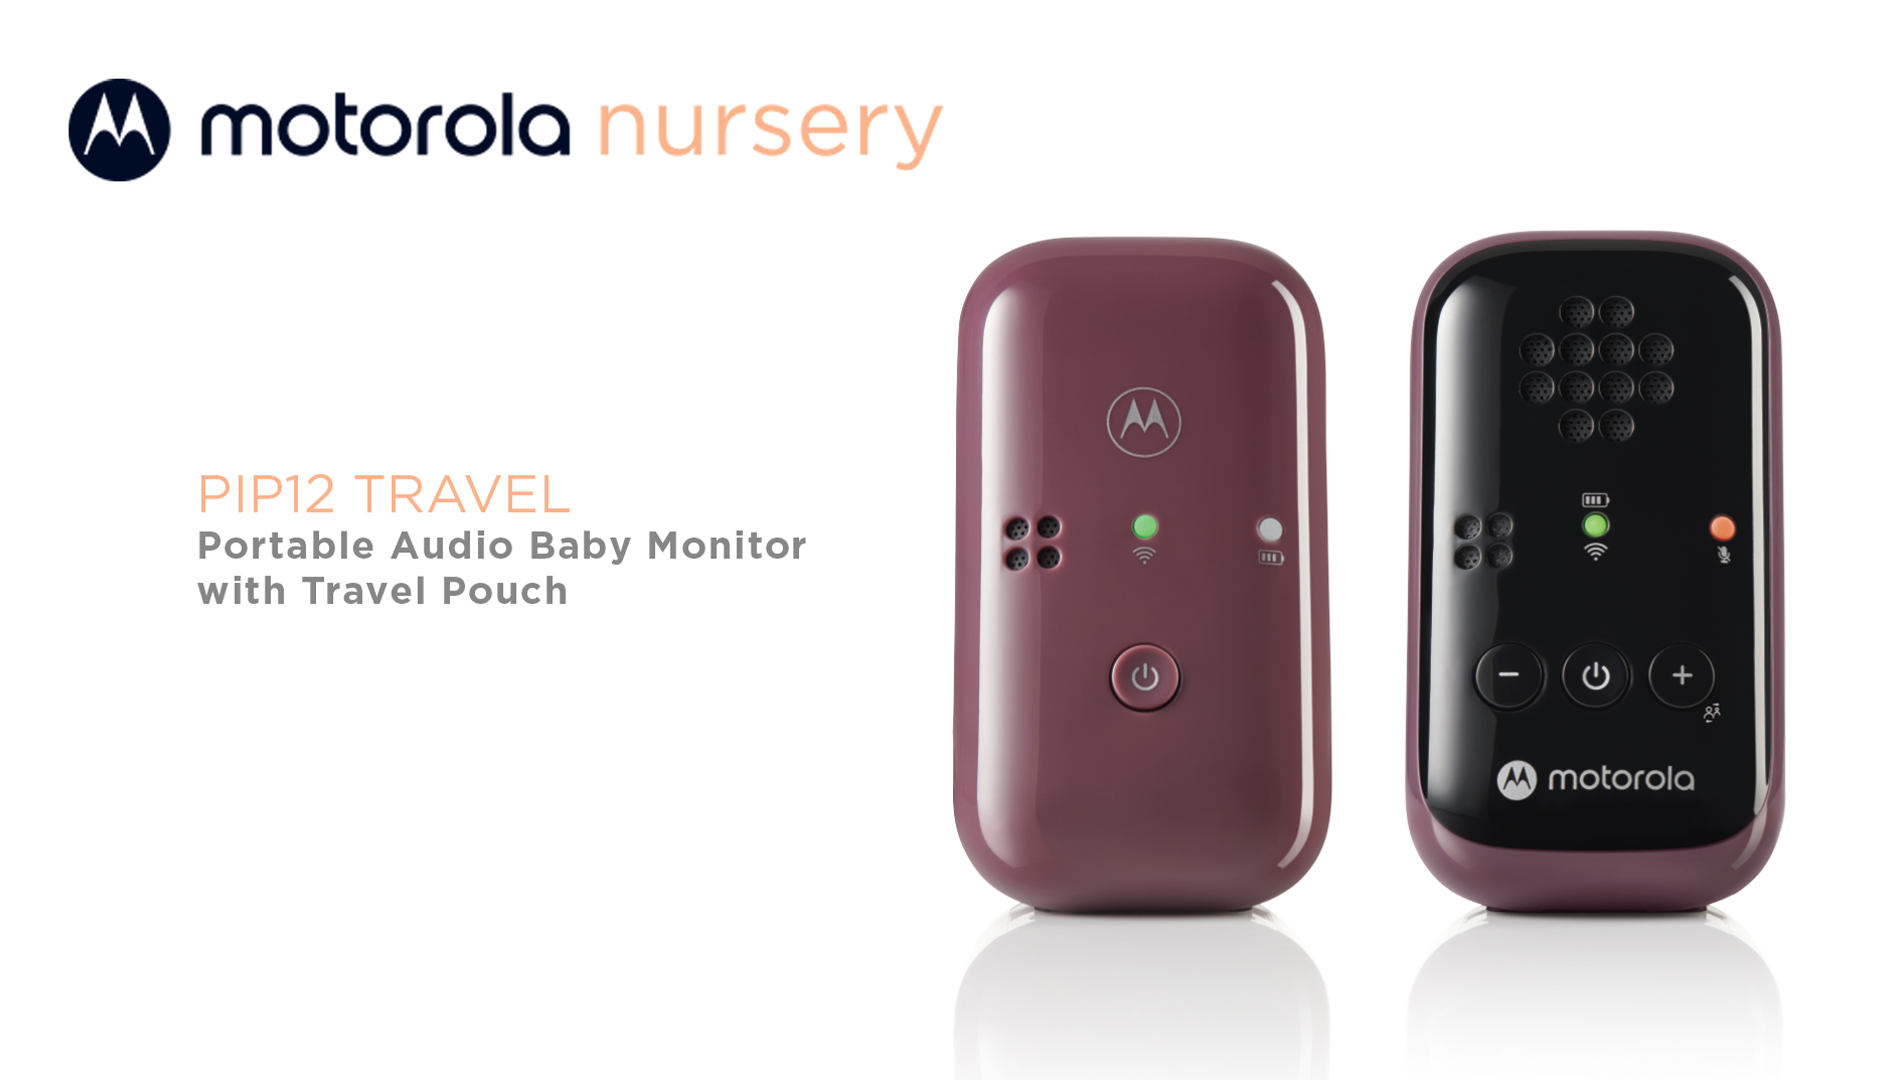 Motorola Nursery  AM24 2 way Audio Baby Monitor